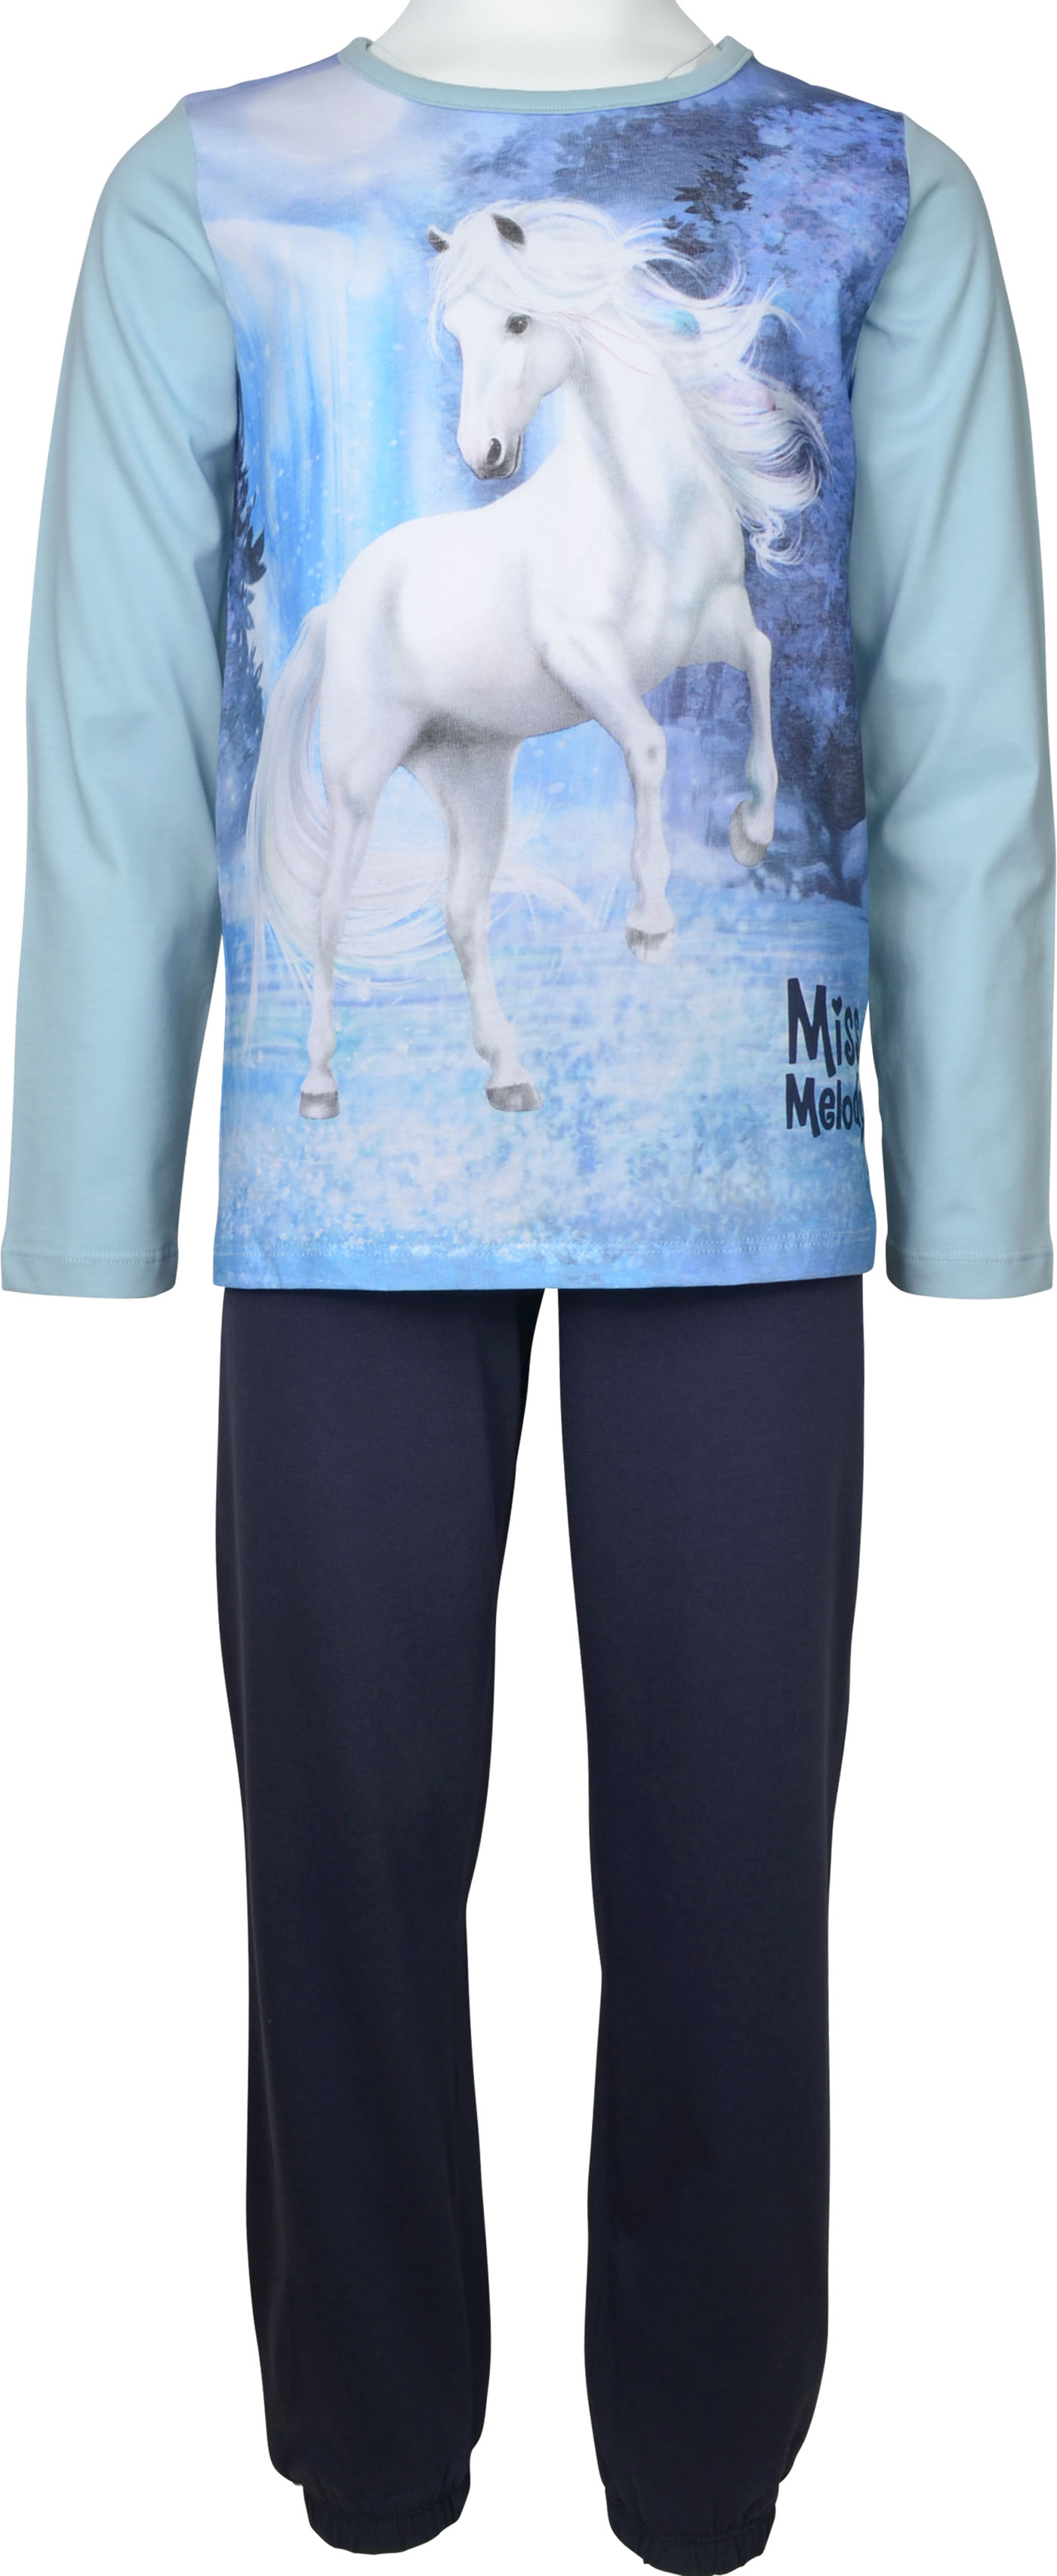 Miss Melody Pyjama long sleeve DREAM HORSE lavender fog shop online at